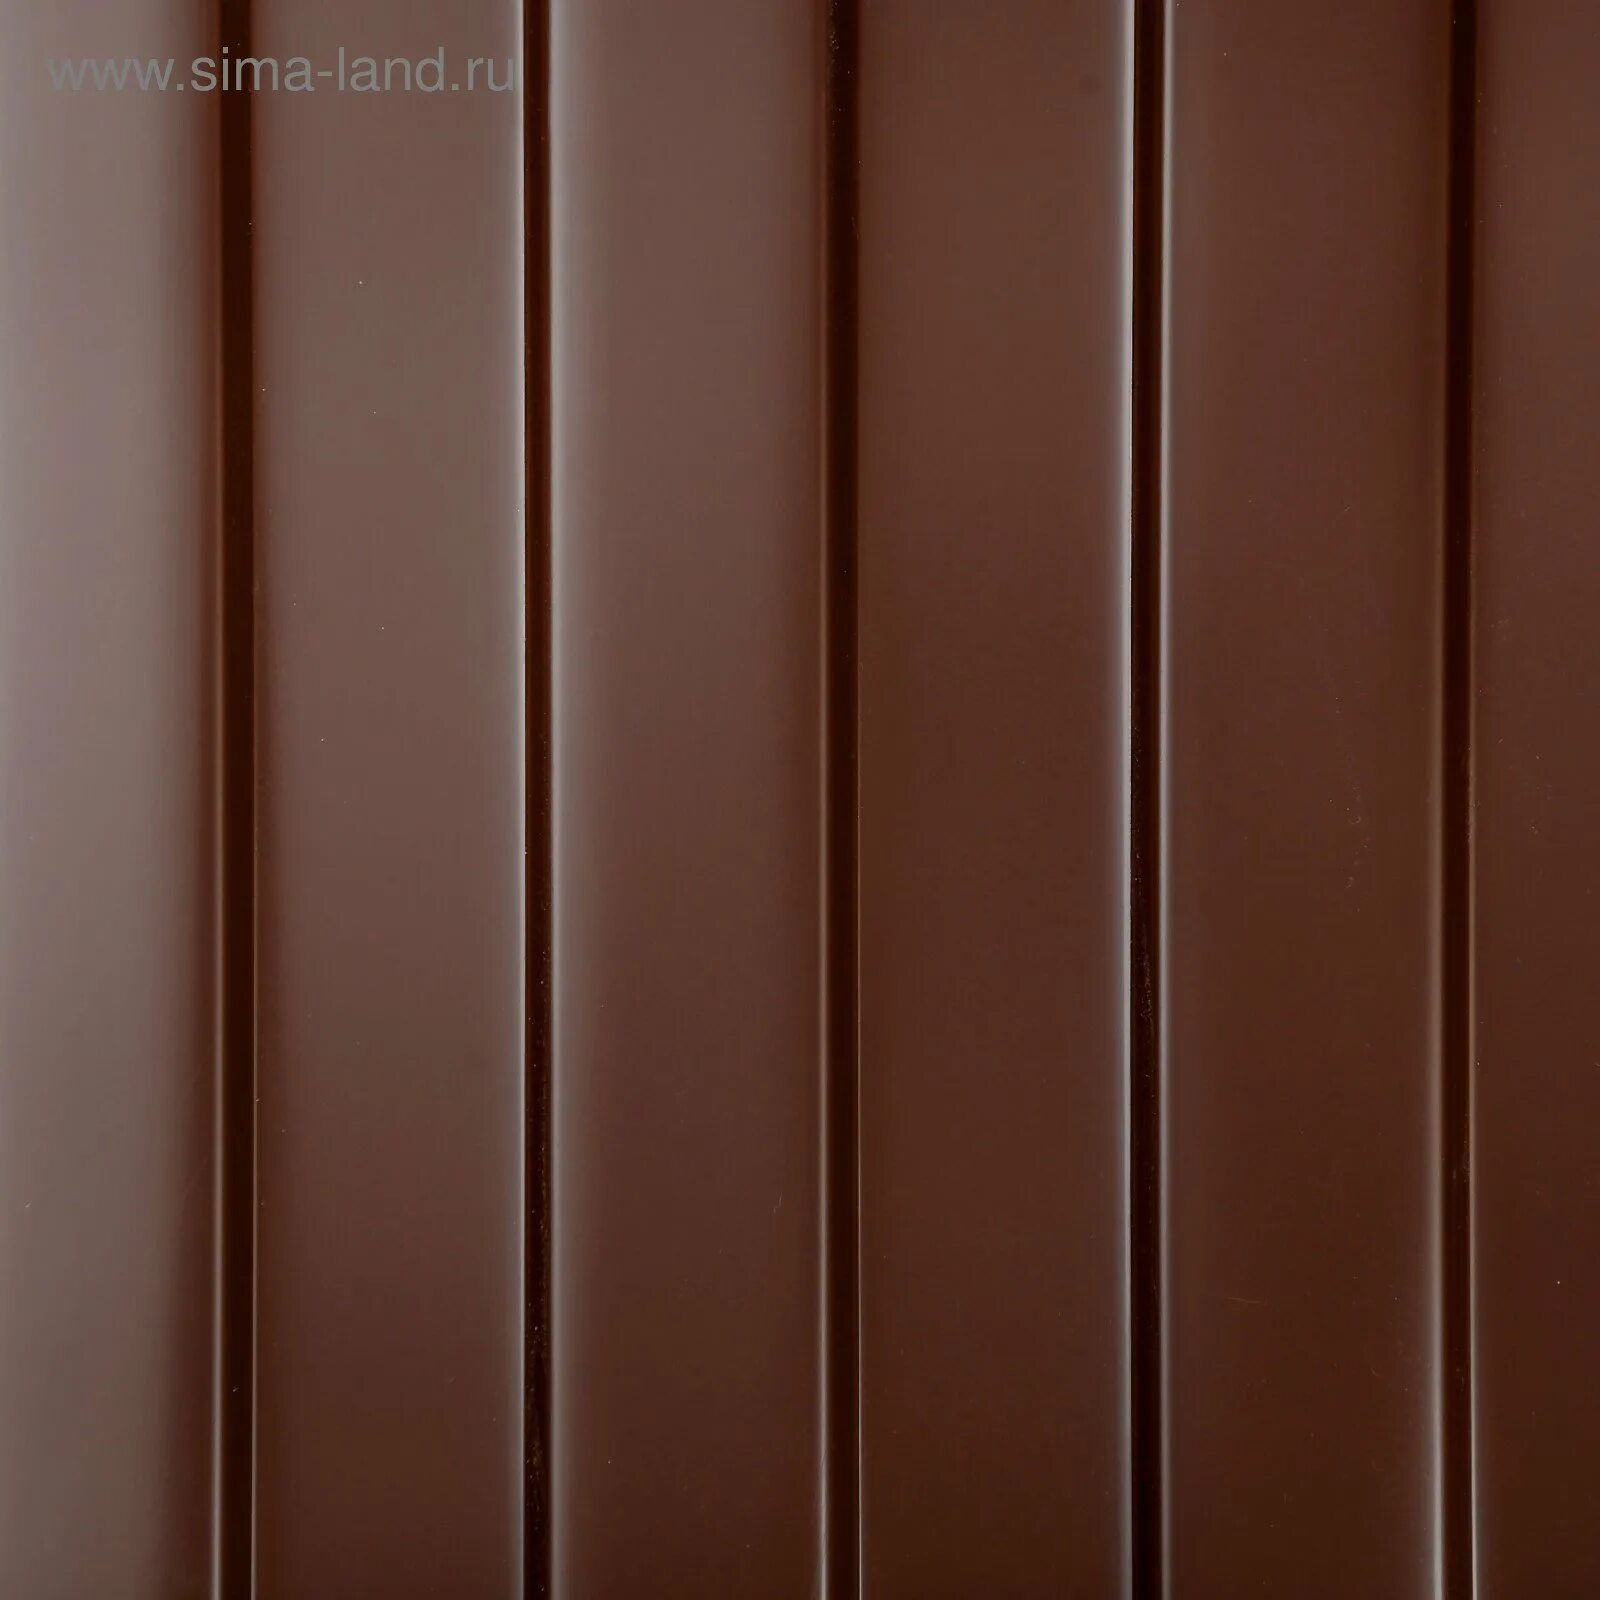 Профнастил коричневый шоколад рал 8017. Профнастил с-8а RAL 8017 2,0х1,20 (темн.корич). Профлист шоколад RAL 8017. Профнастил RAL 8017 коричневый шоколад. Ral 8017 коричневый шоколад